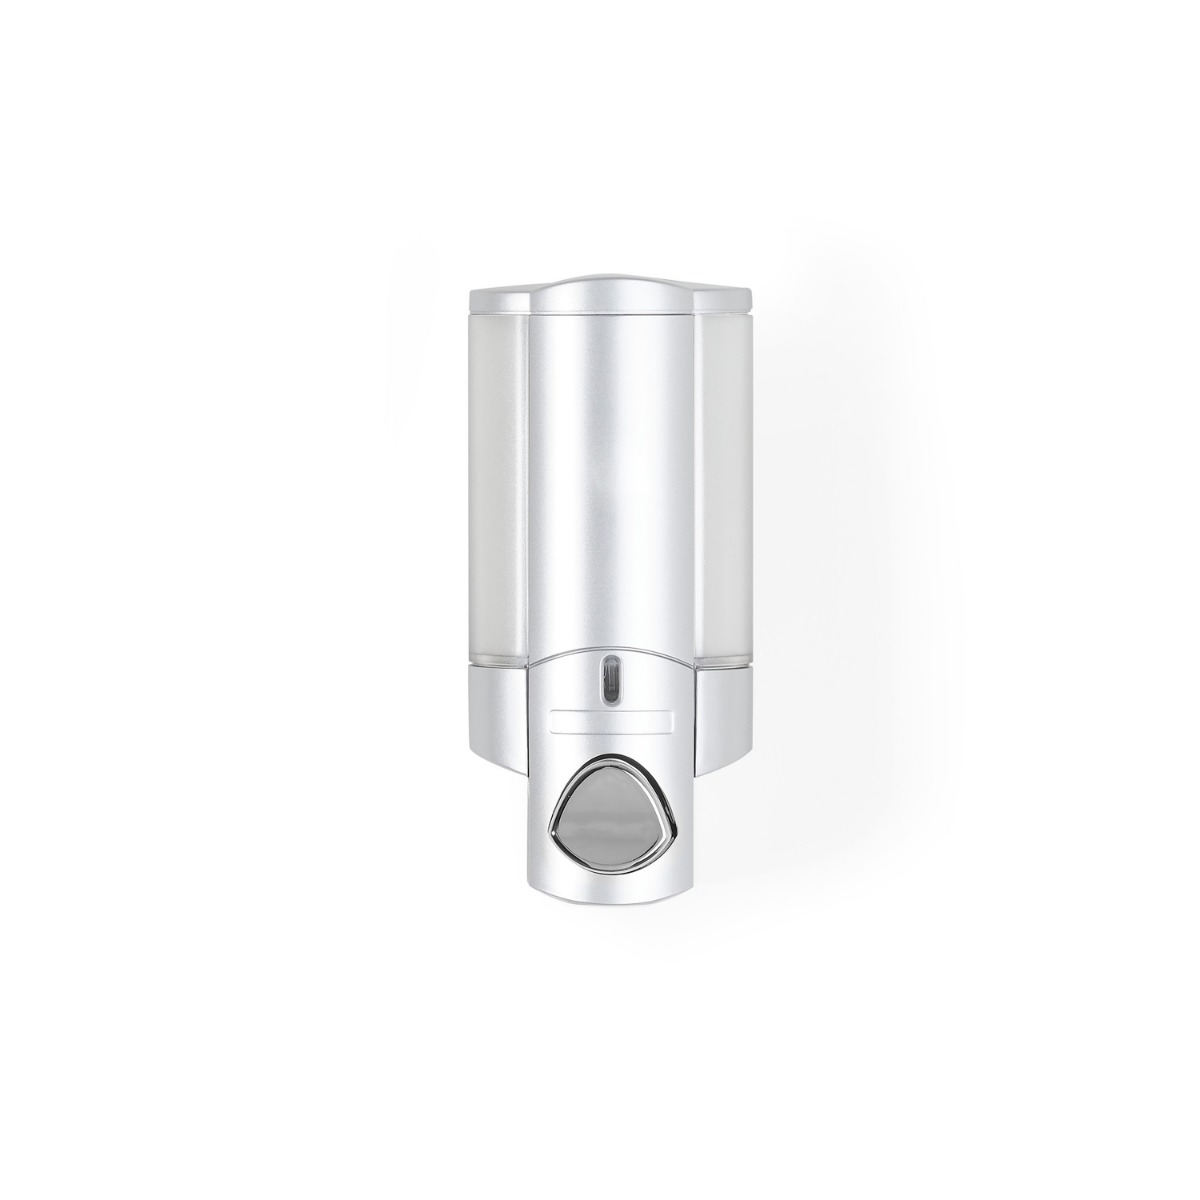 AVIVA Lockable Soap and Sanitiser Dispenser 1 - Satin Silver with Translucent Chamber, Chrome Button